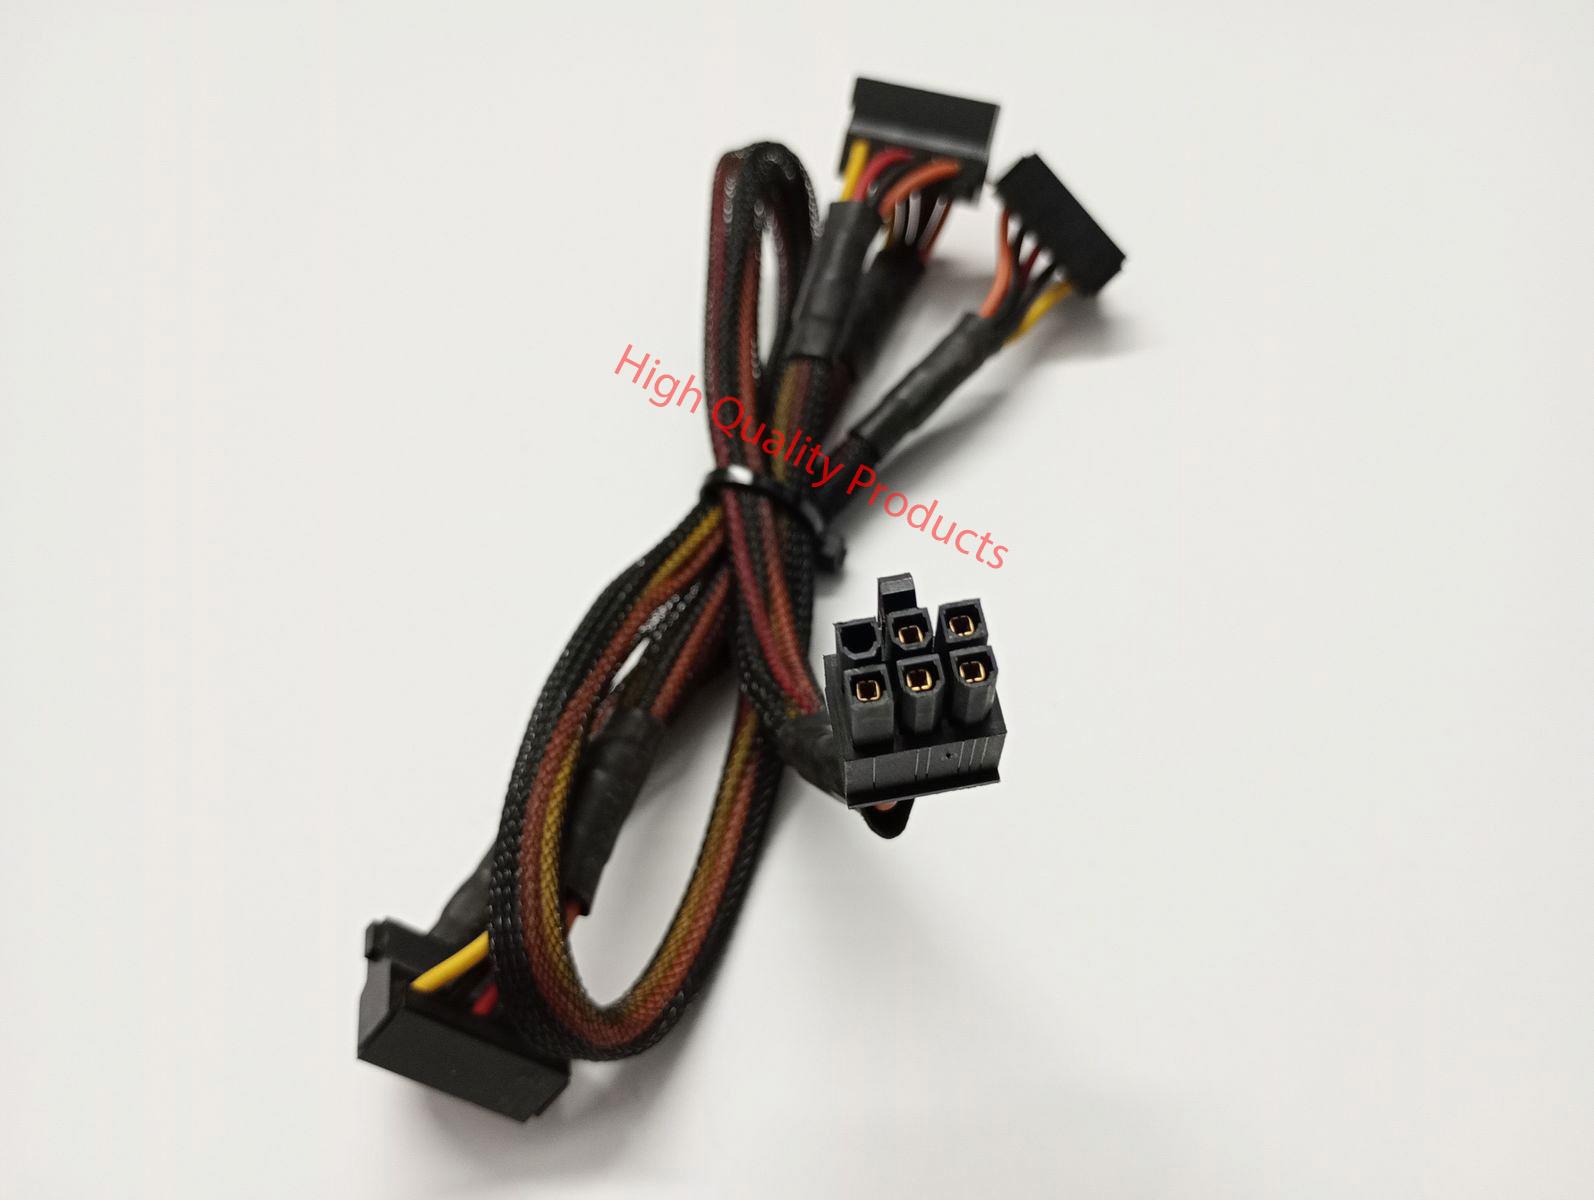 -----Cable Modular for Power Supply OCZ MODXSTREAM-PRO Serie Foto 7201167-p1.jpg